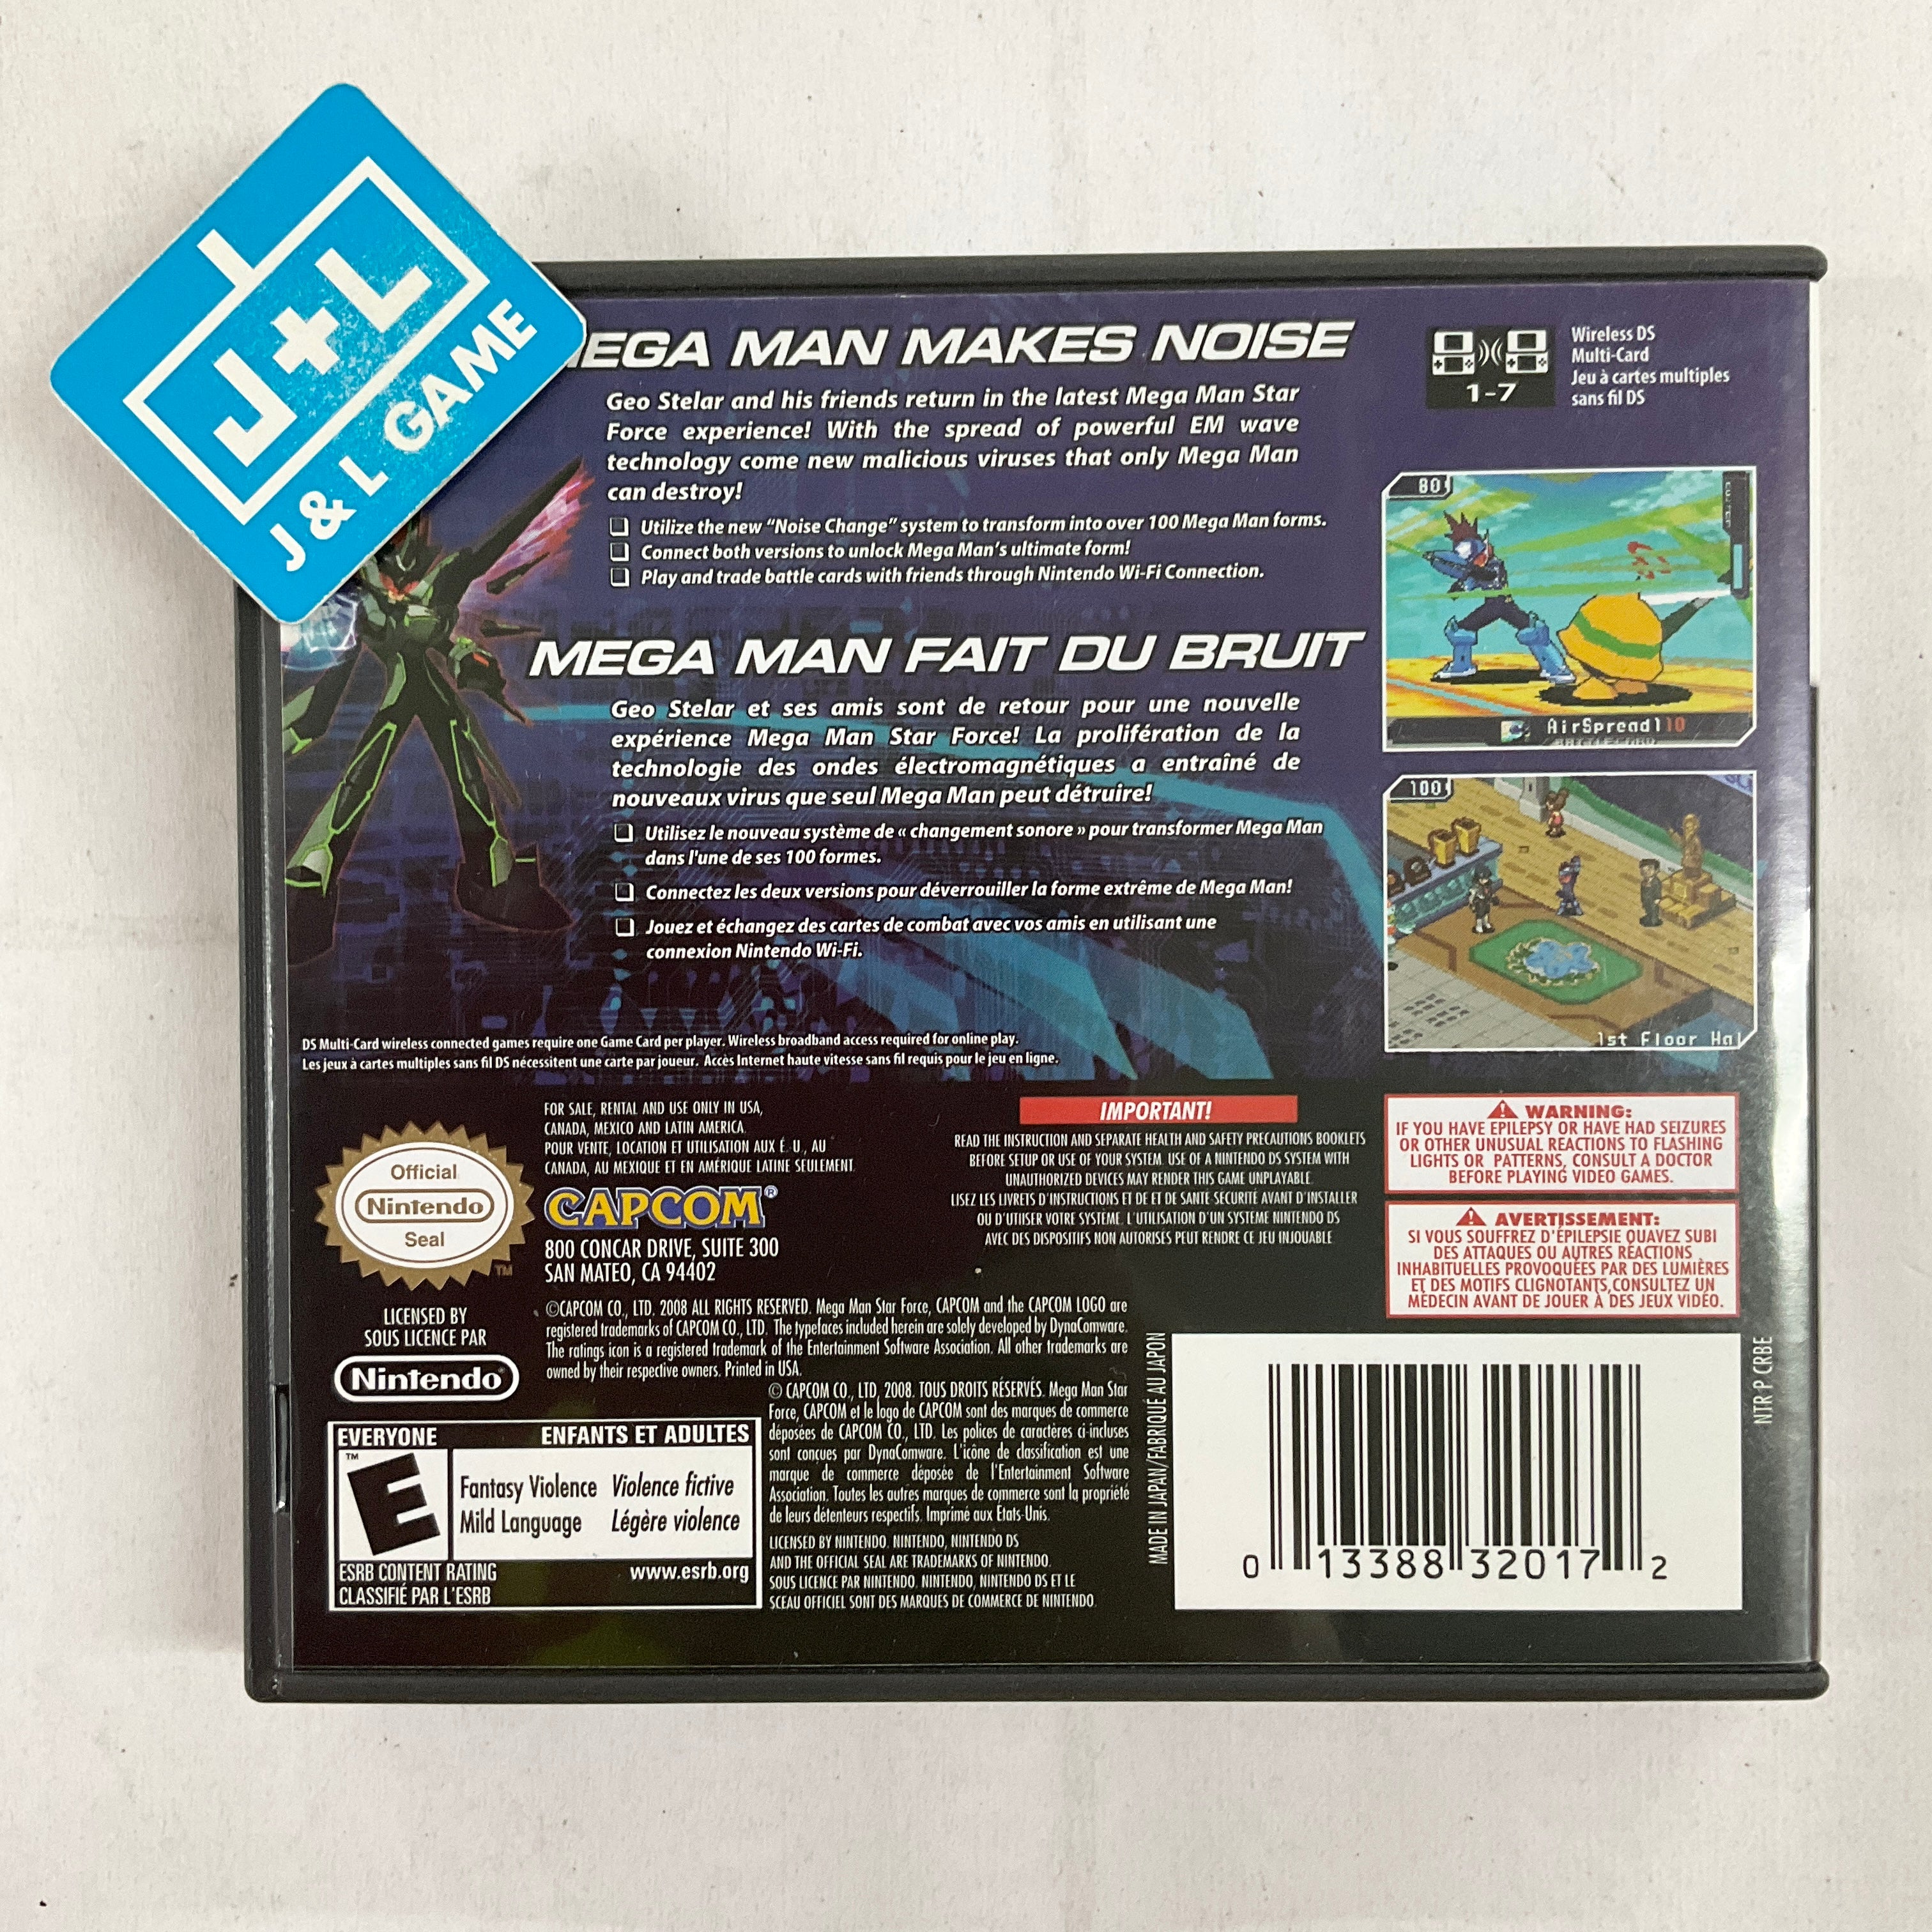 Mega Man Star Force 3: Black Ace - (NDS) Nintendo DS [Pre-Owned] Video Games Capcom   